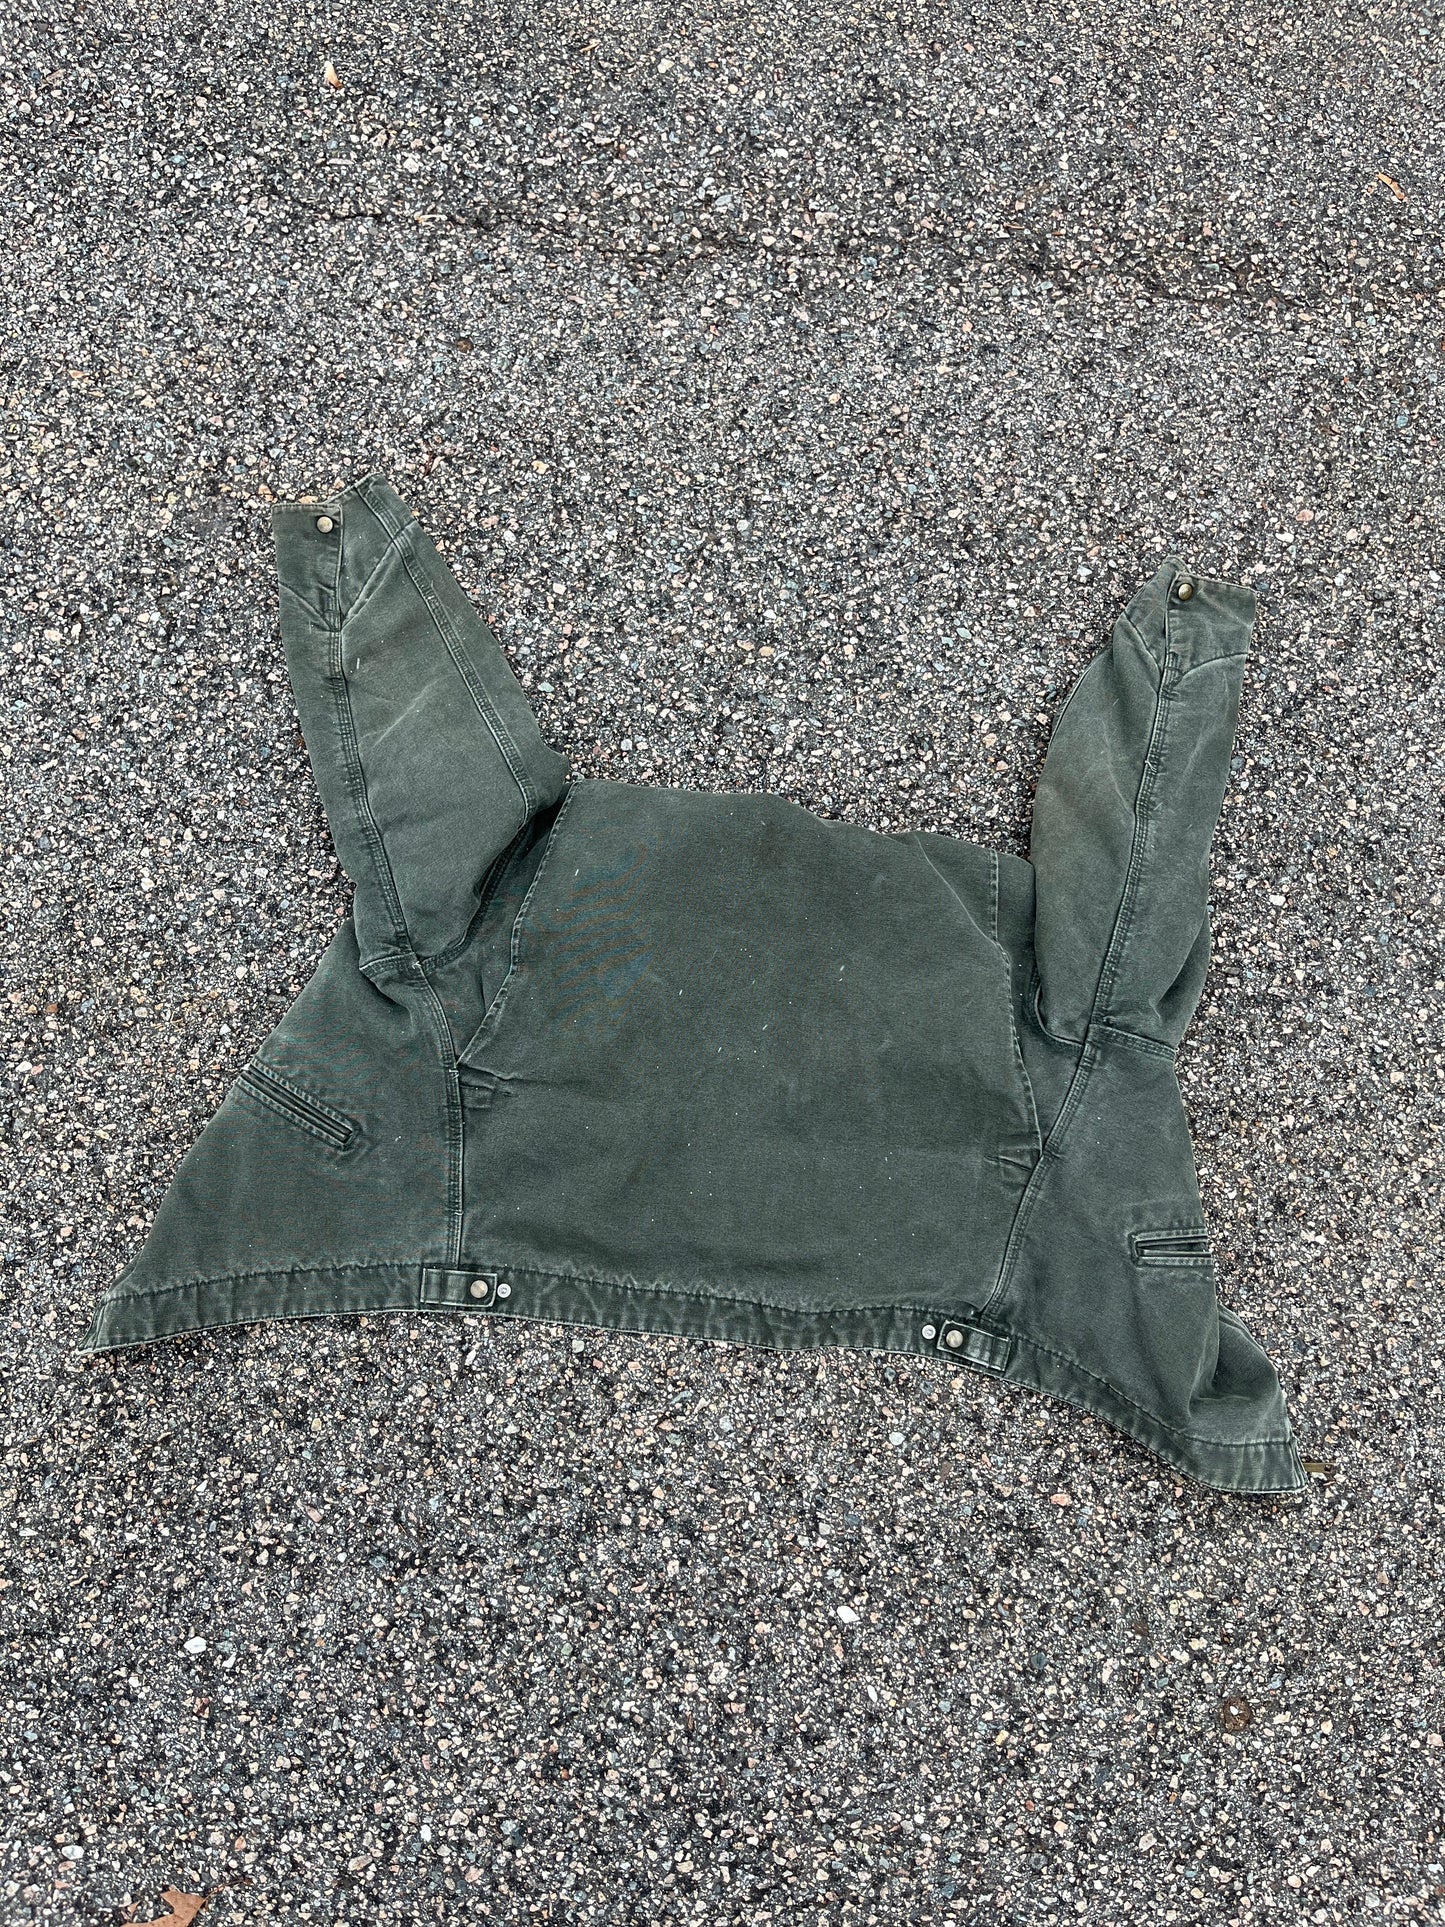 Faded Olive Green Carhartt Detroit Jacket Jacket - Medium